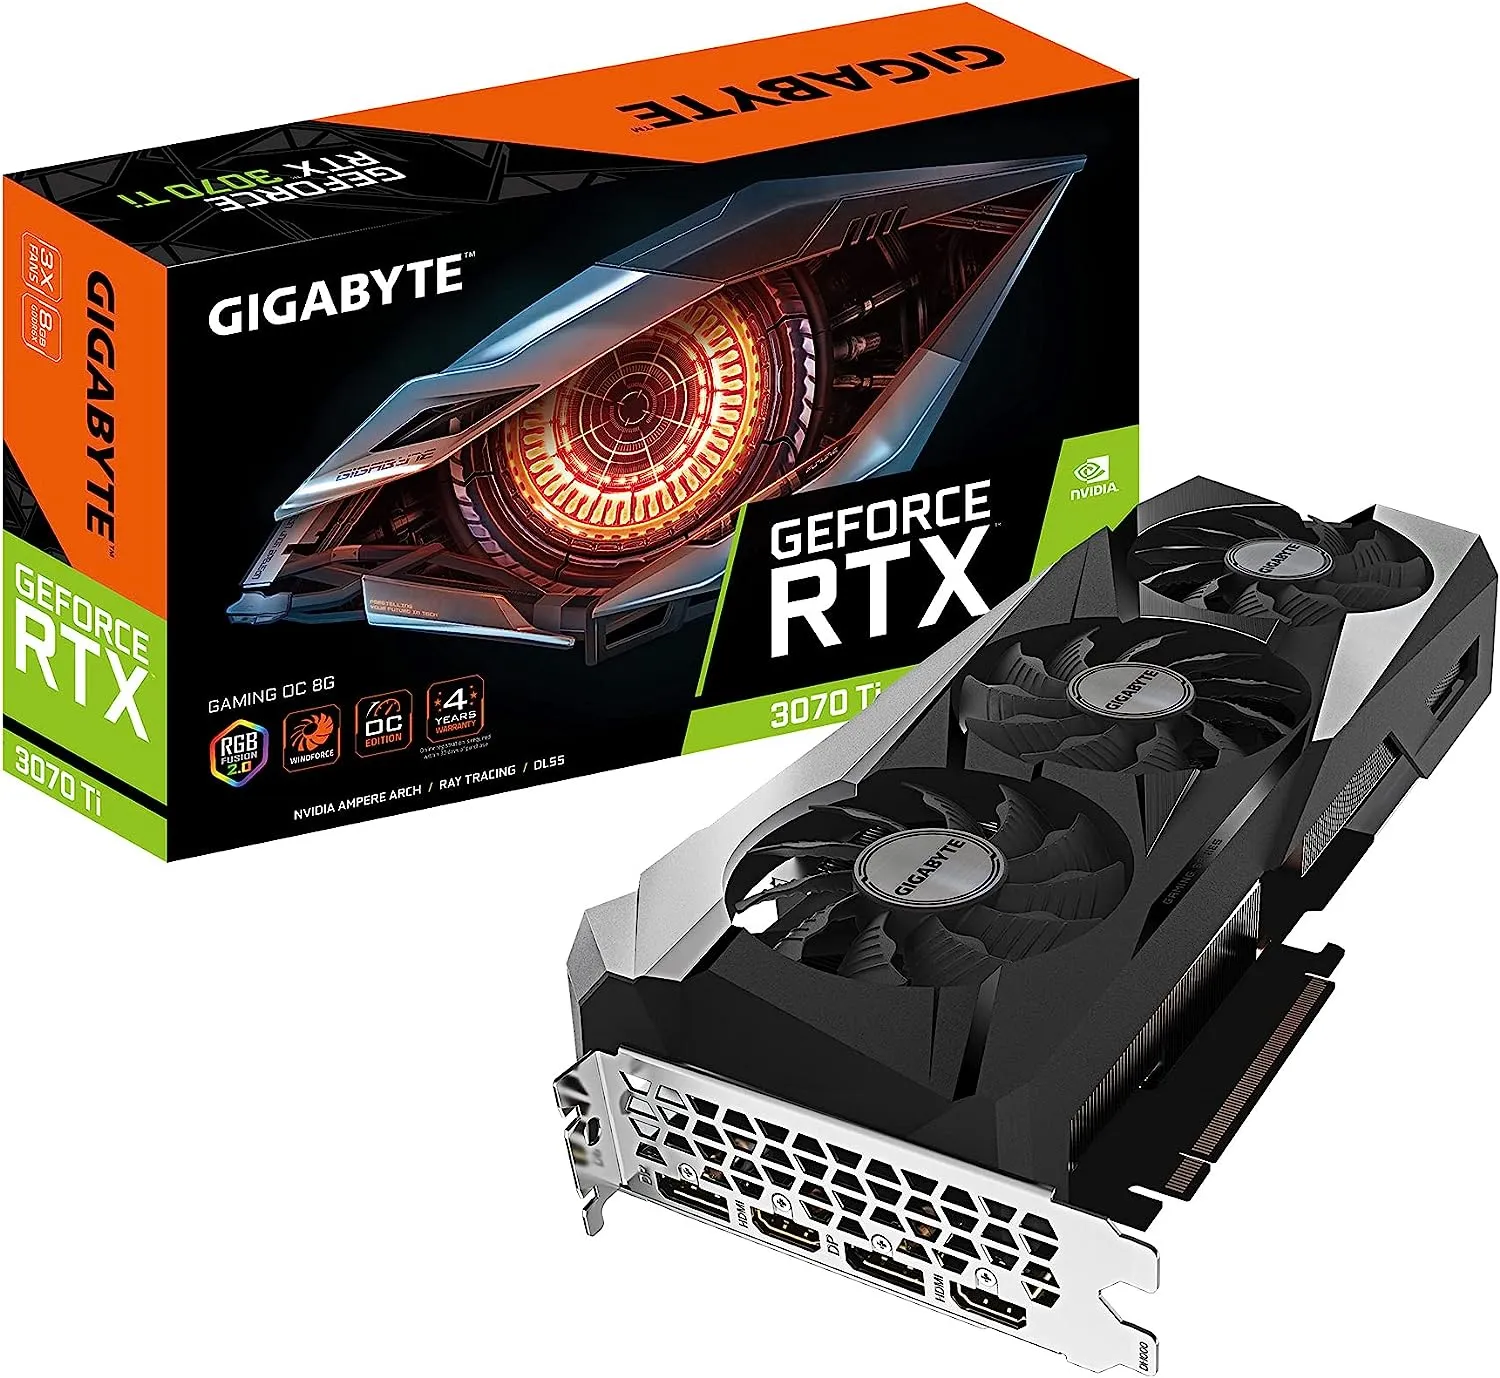 GIGABYTE GeForce RTX 3070 Graphics Card